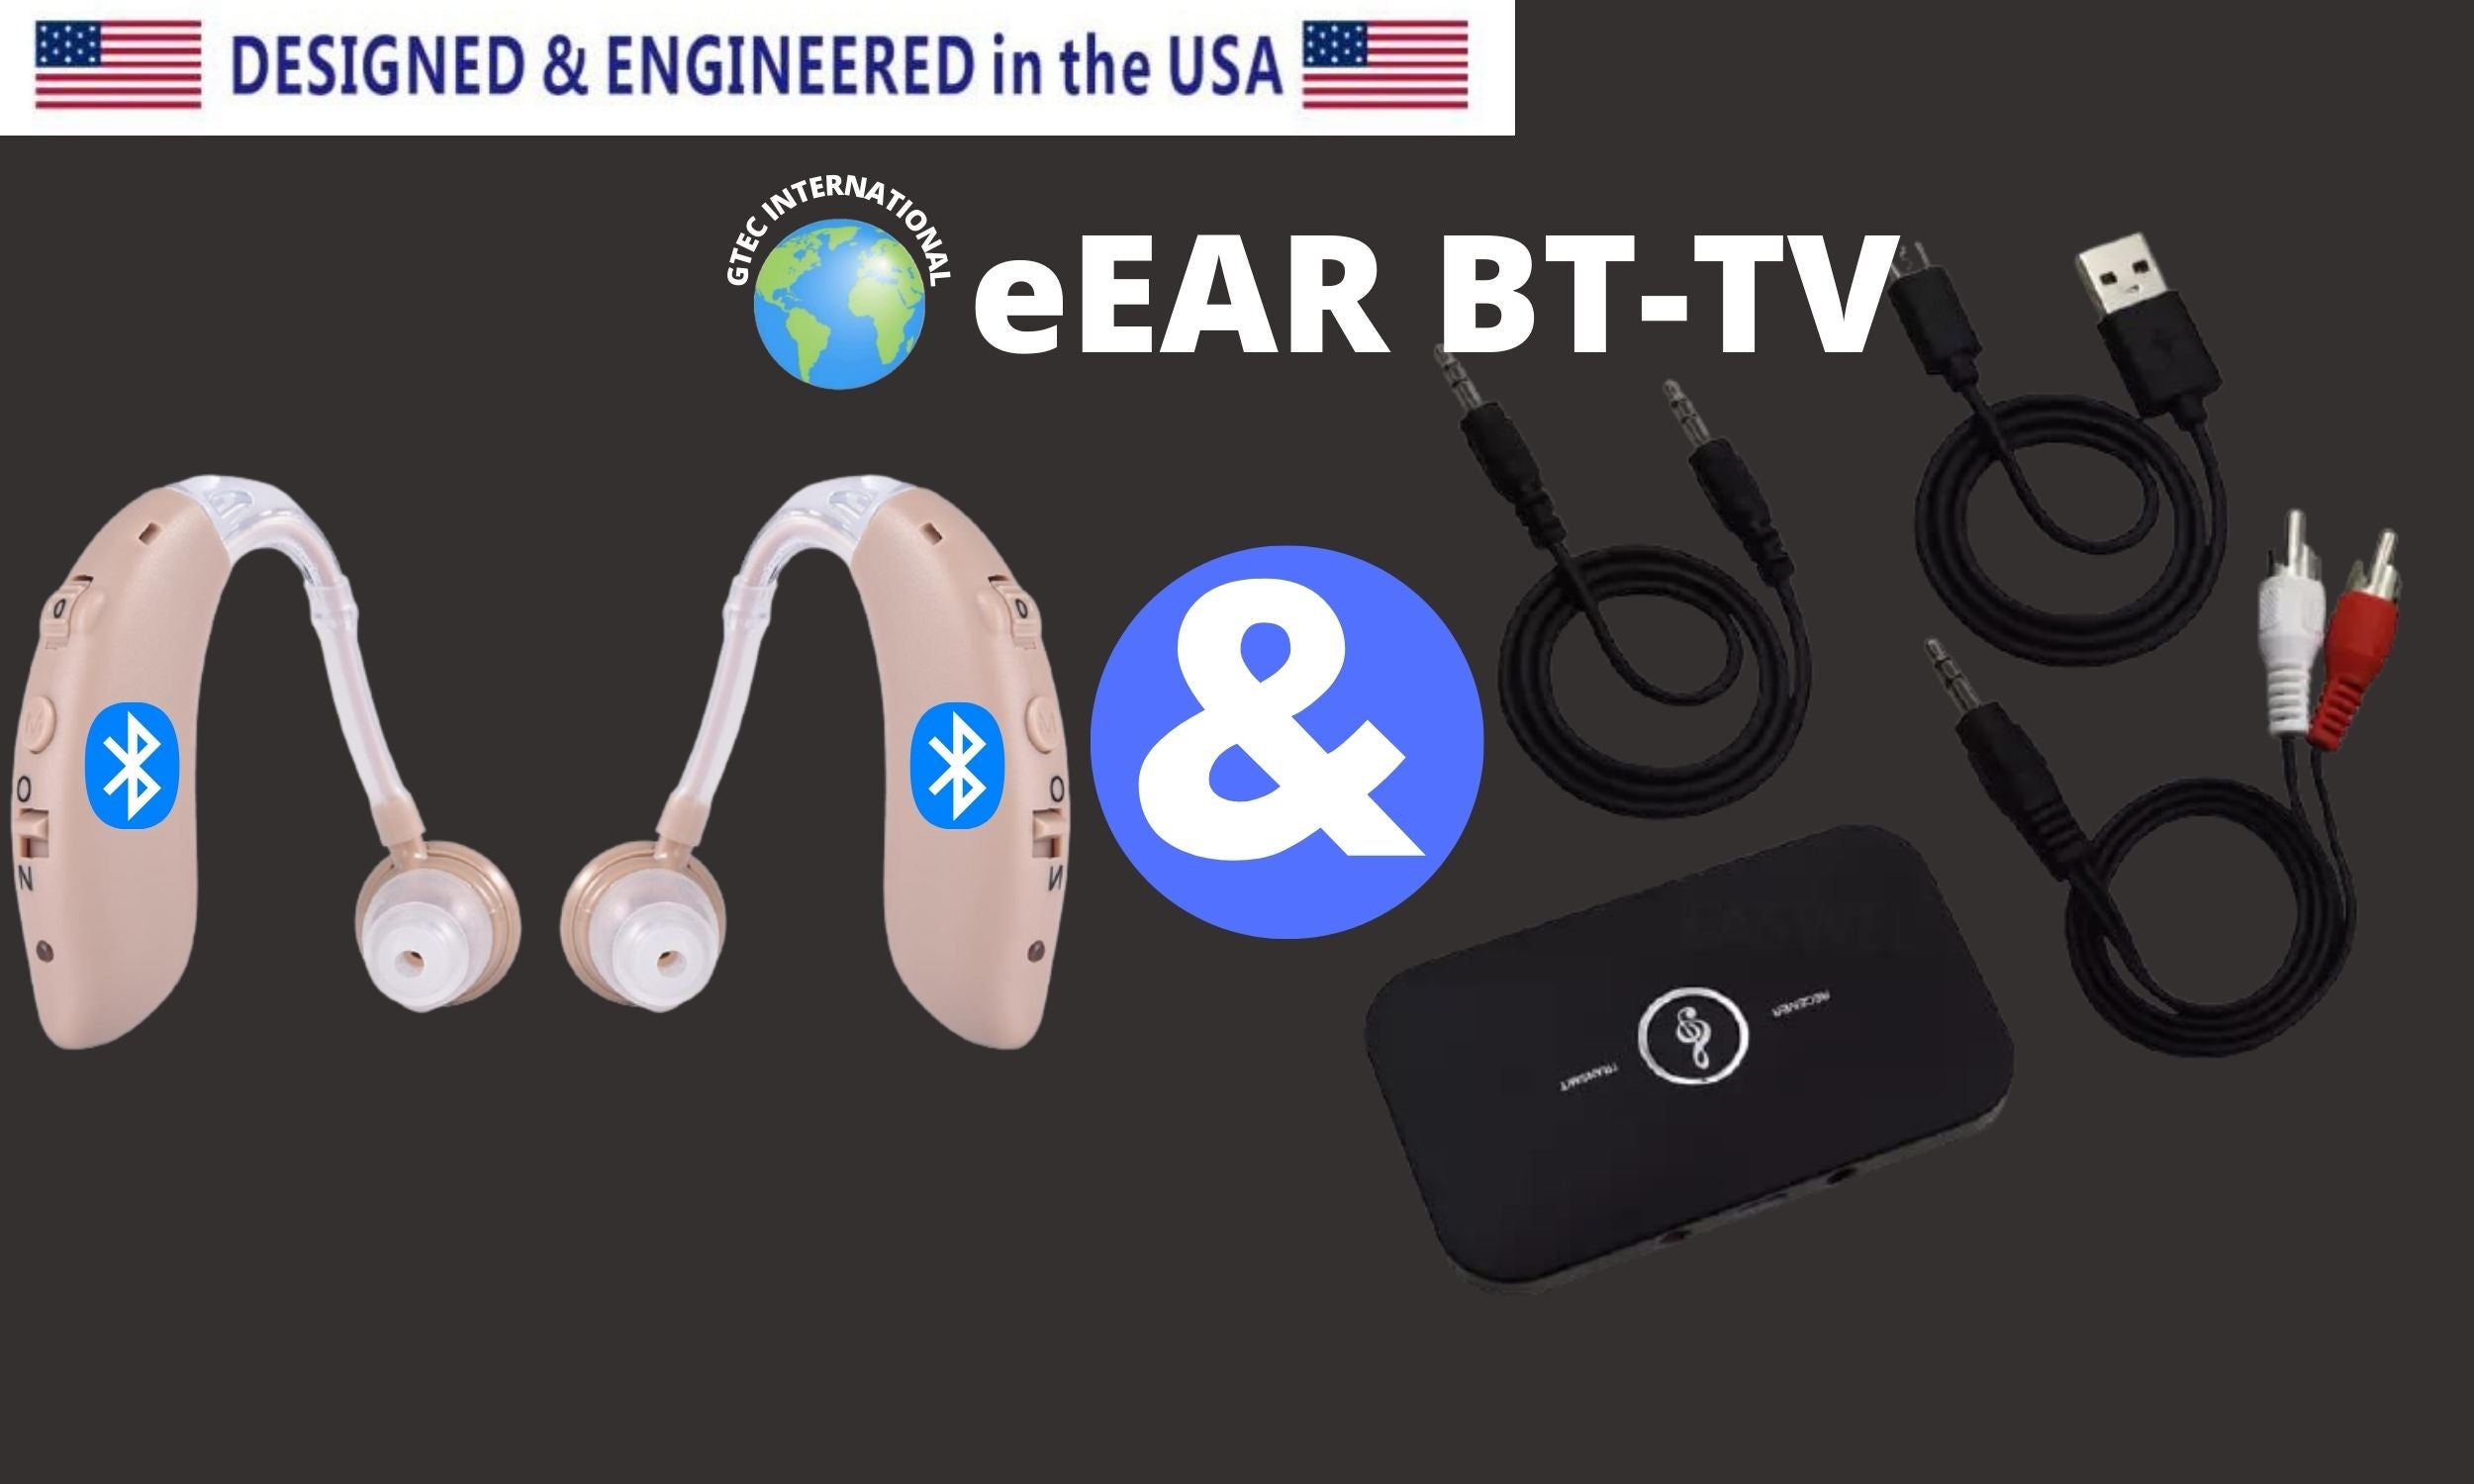 eEAR 蓝牙电视系统 eEAR BT-TV-02 Pair 在美国设计和制造的助听器用户和听力障碍者收听电视的完美解决方案